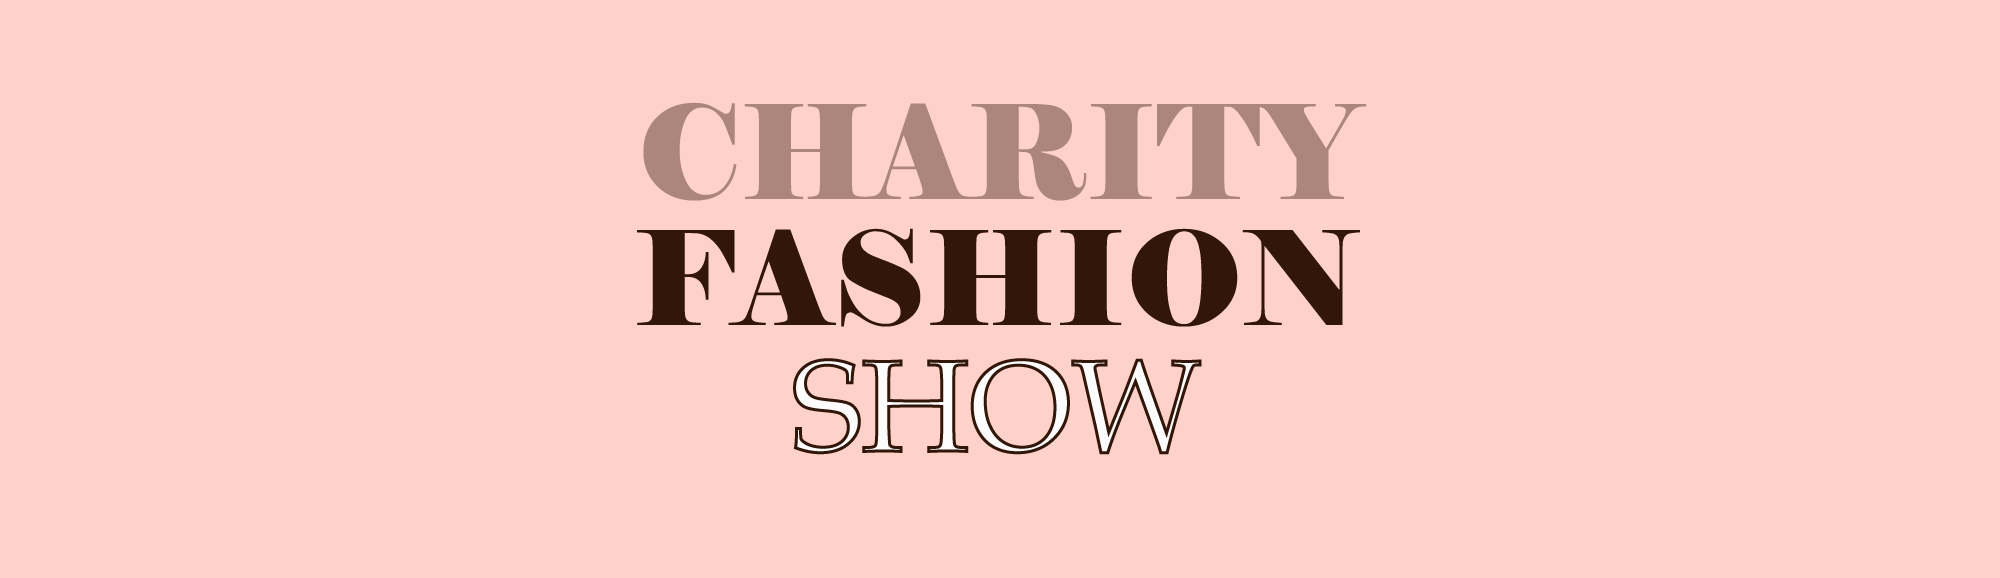 Charity Fashion Show